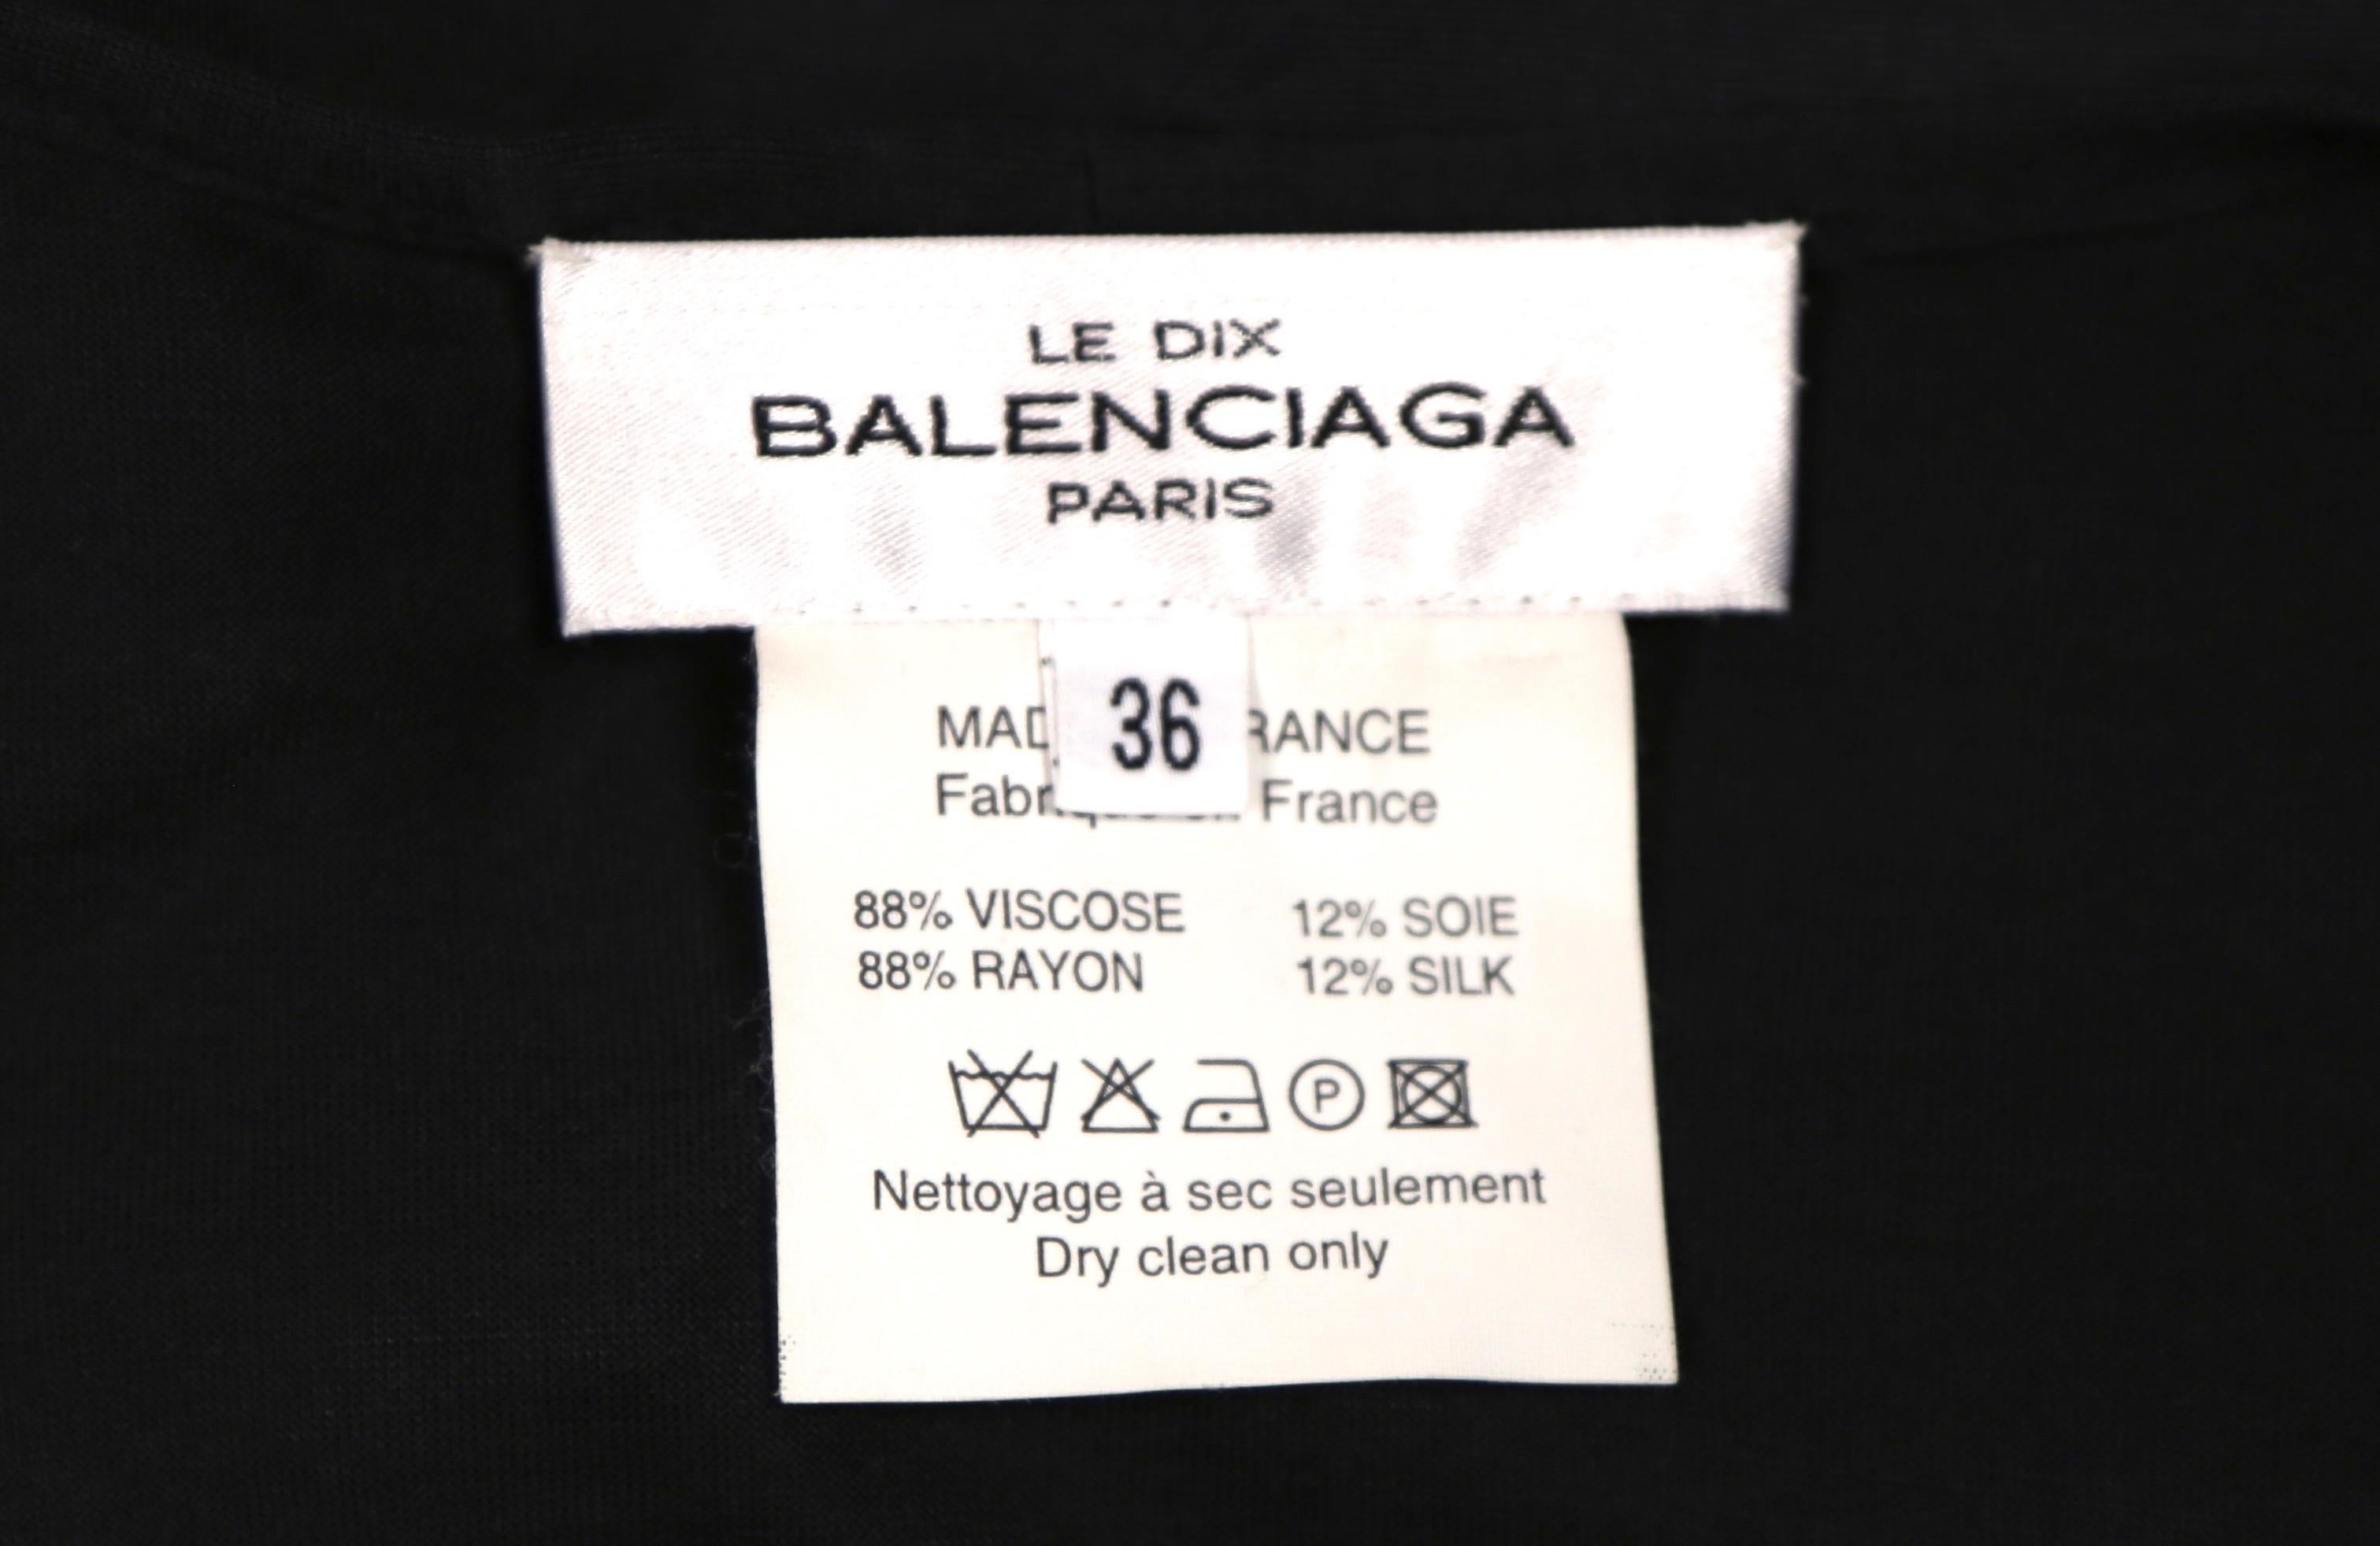 2000 BALENCIAGA le dix by NICOLAS GHESQUIERE jersey wrap dress In Good Condition For Sale In San Fransisco, CA